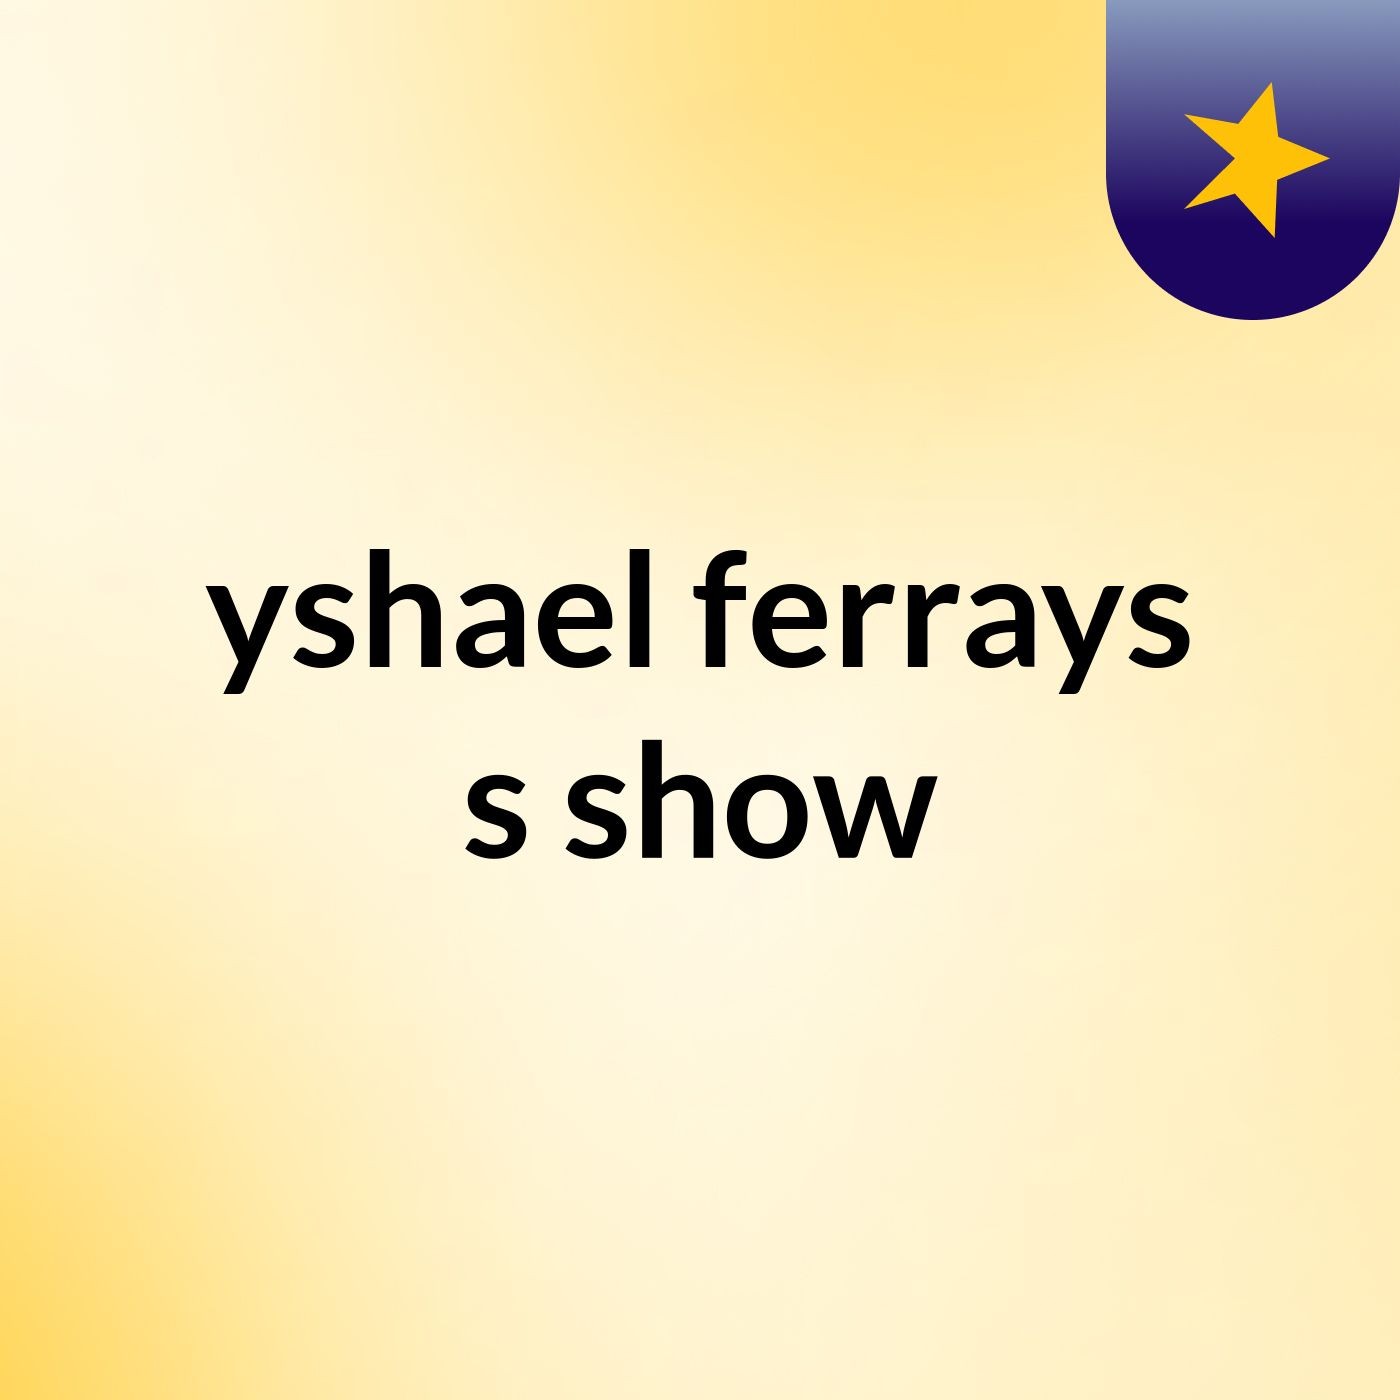 yshael ferrays's show